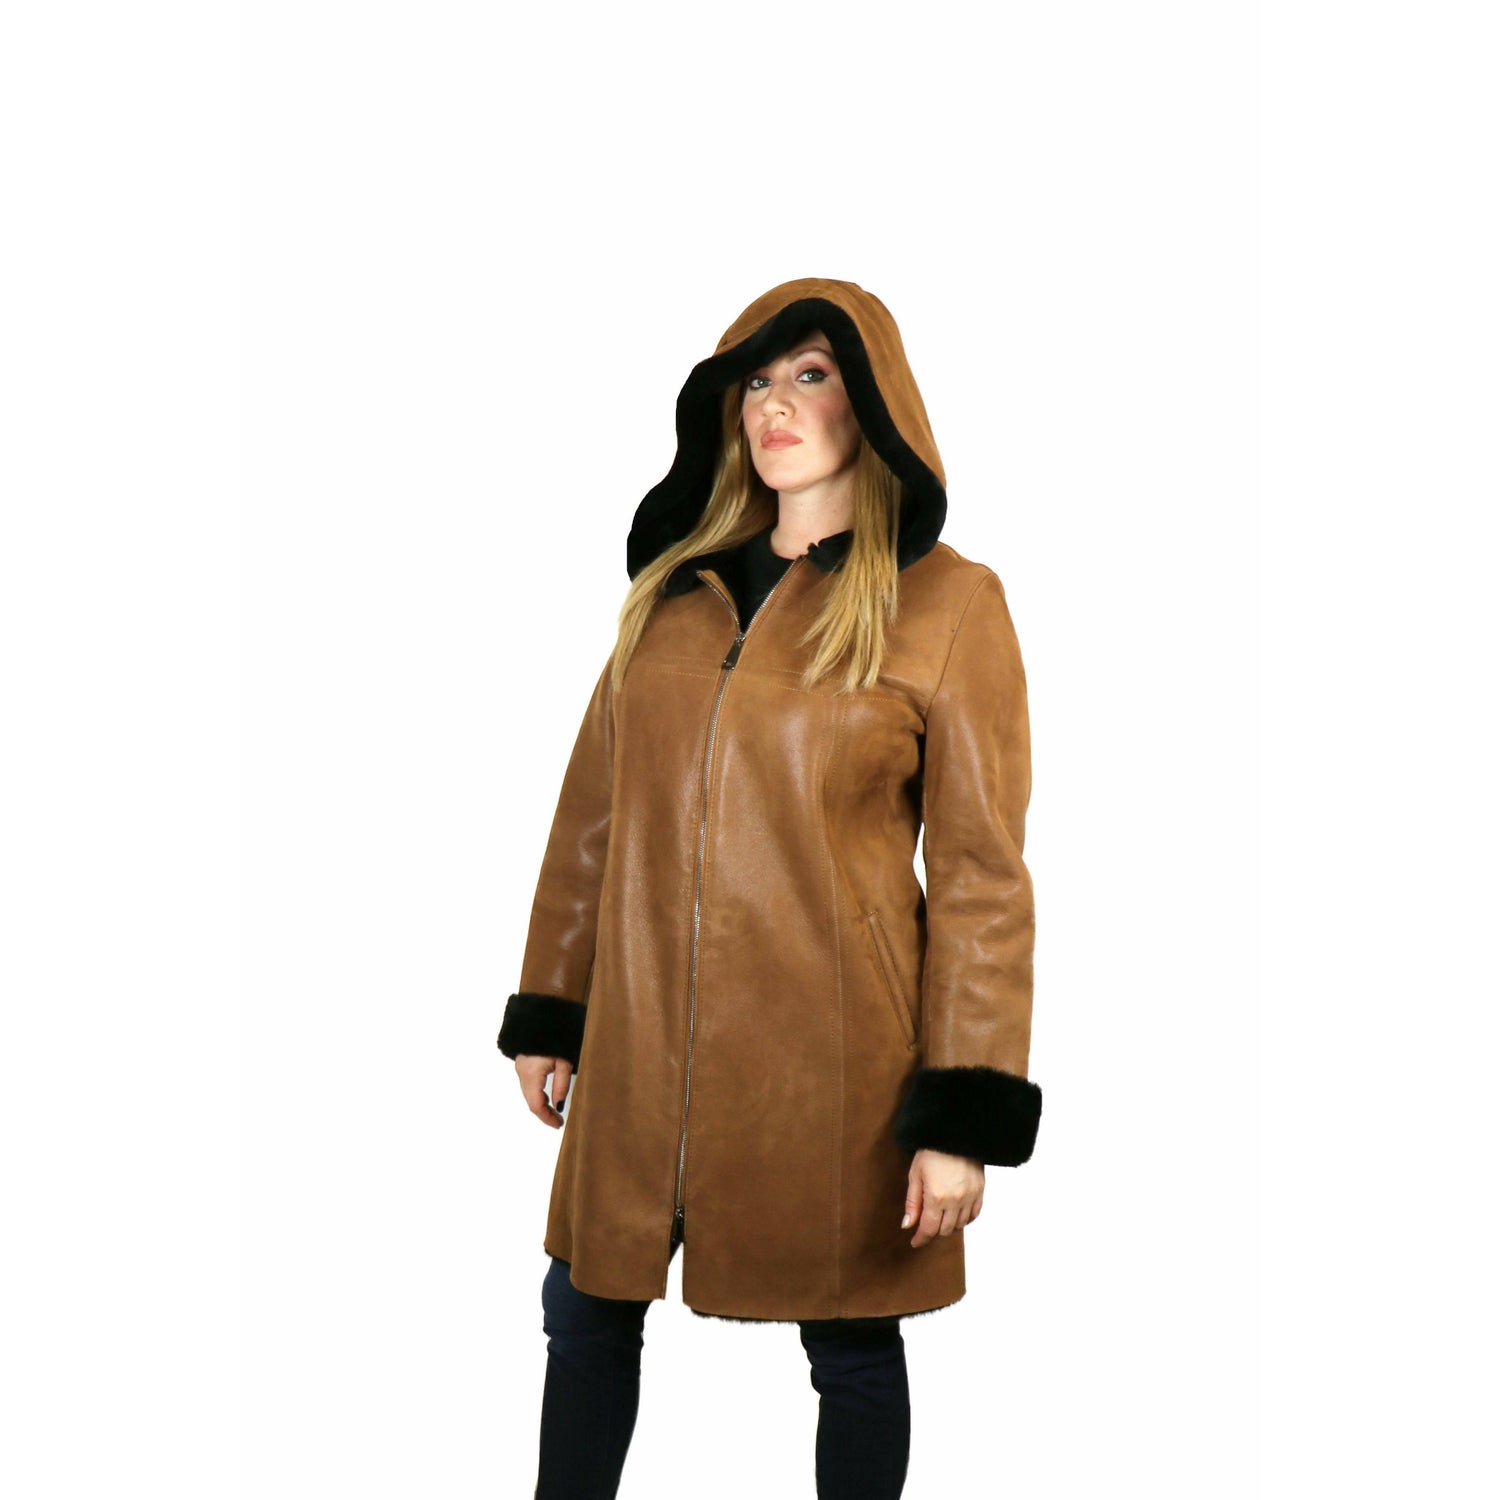 Zooloo Women's Sheepskin Shearling Winter Coat - Zooloo Leather